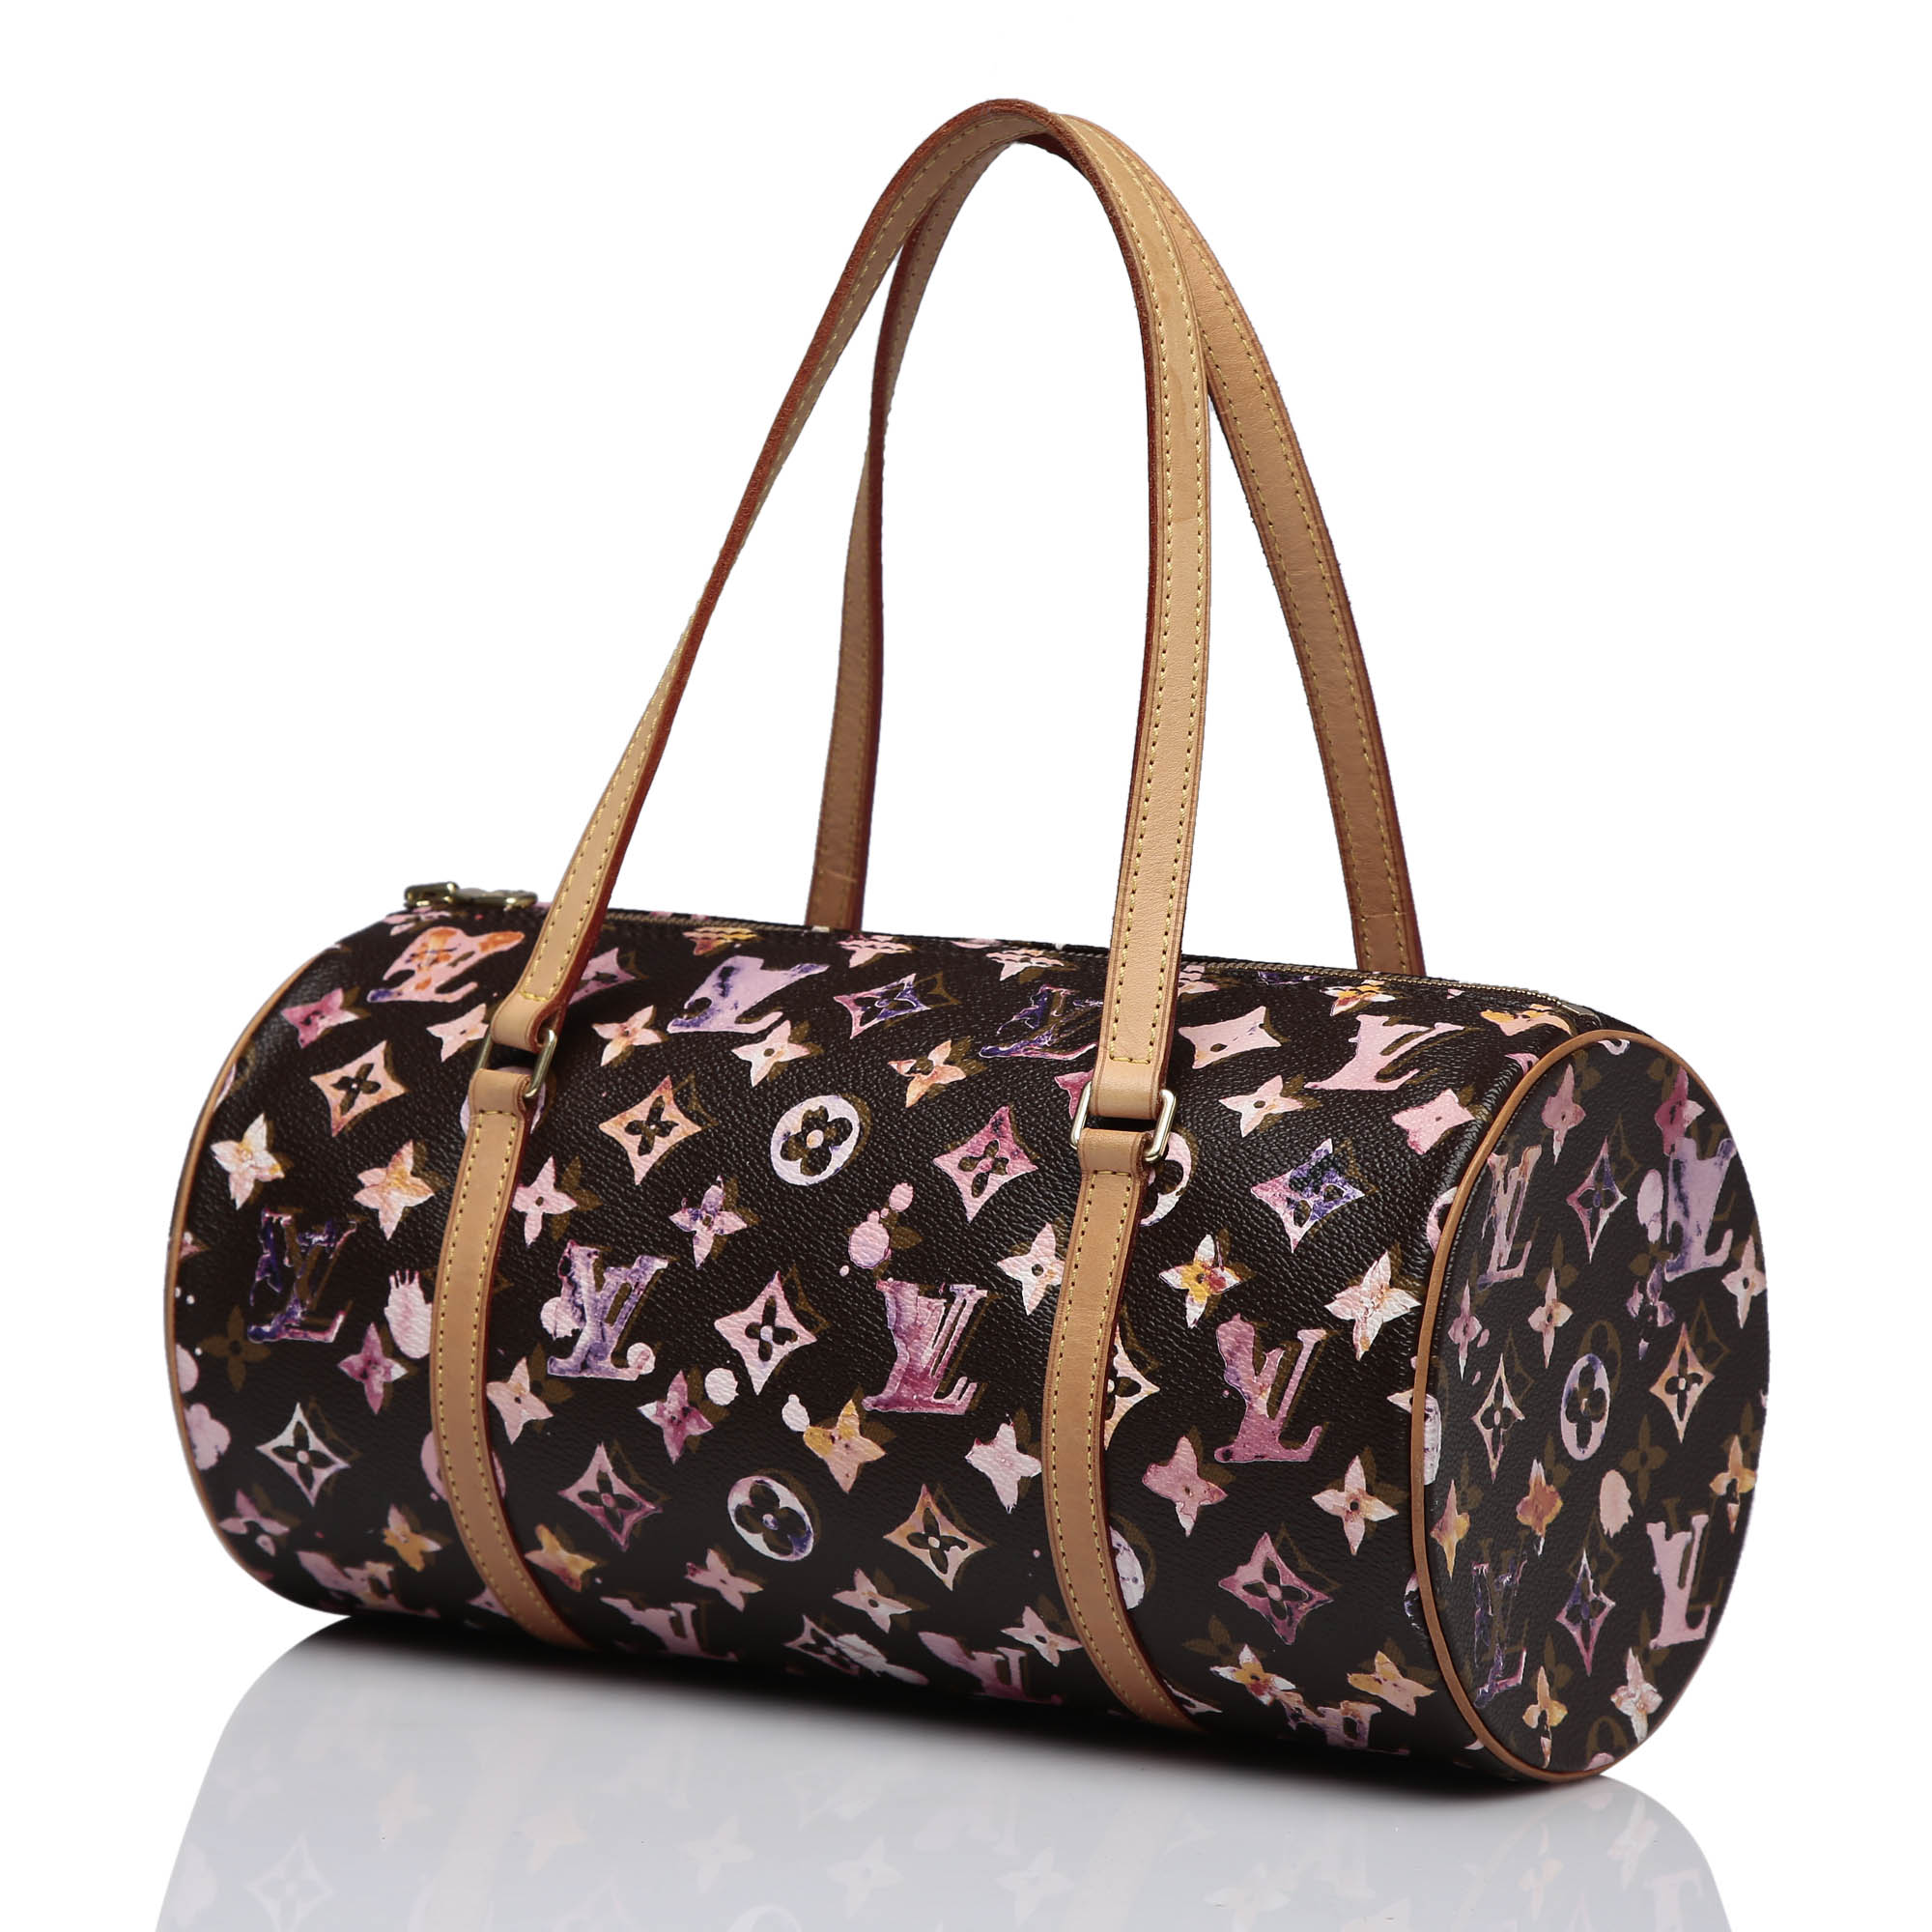 Buy Louis Vuitton Vintage Handbags 80s Online In India -  India